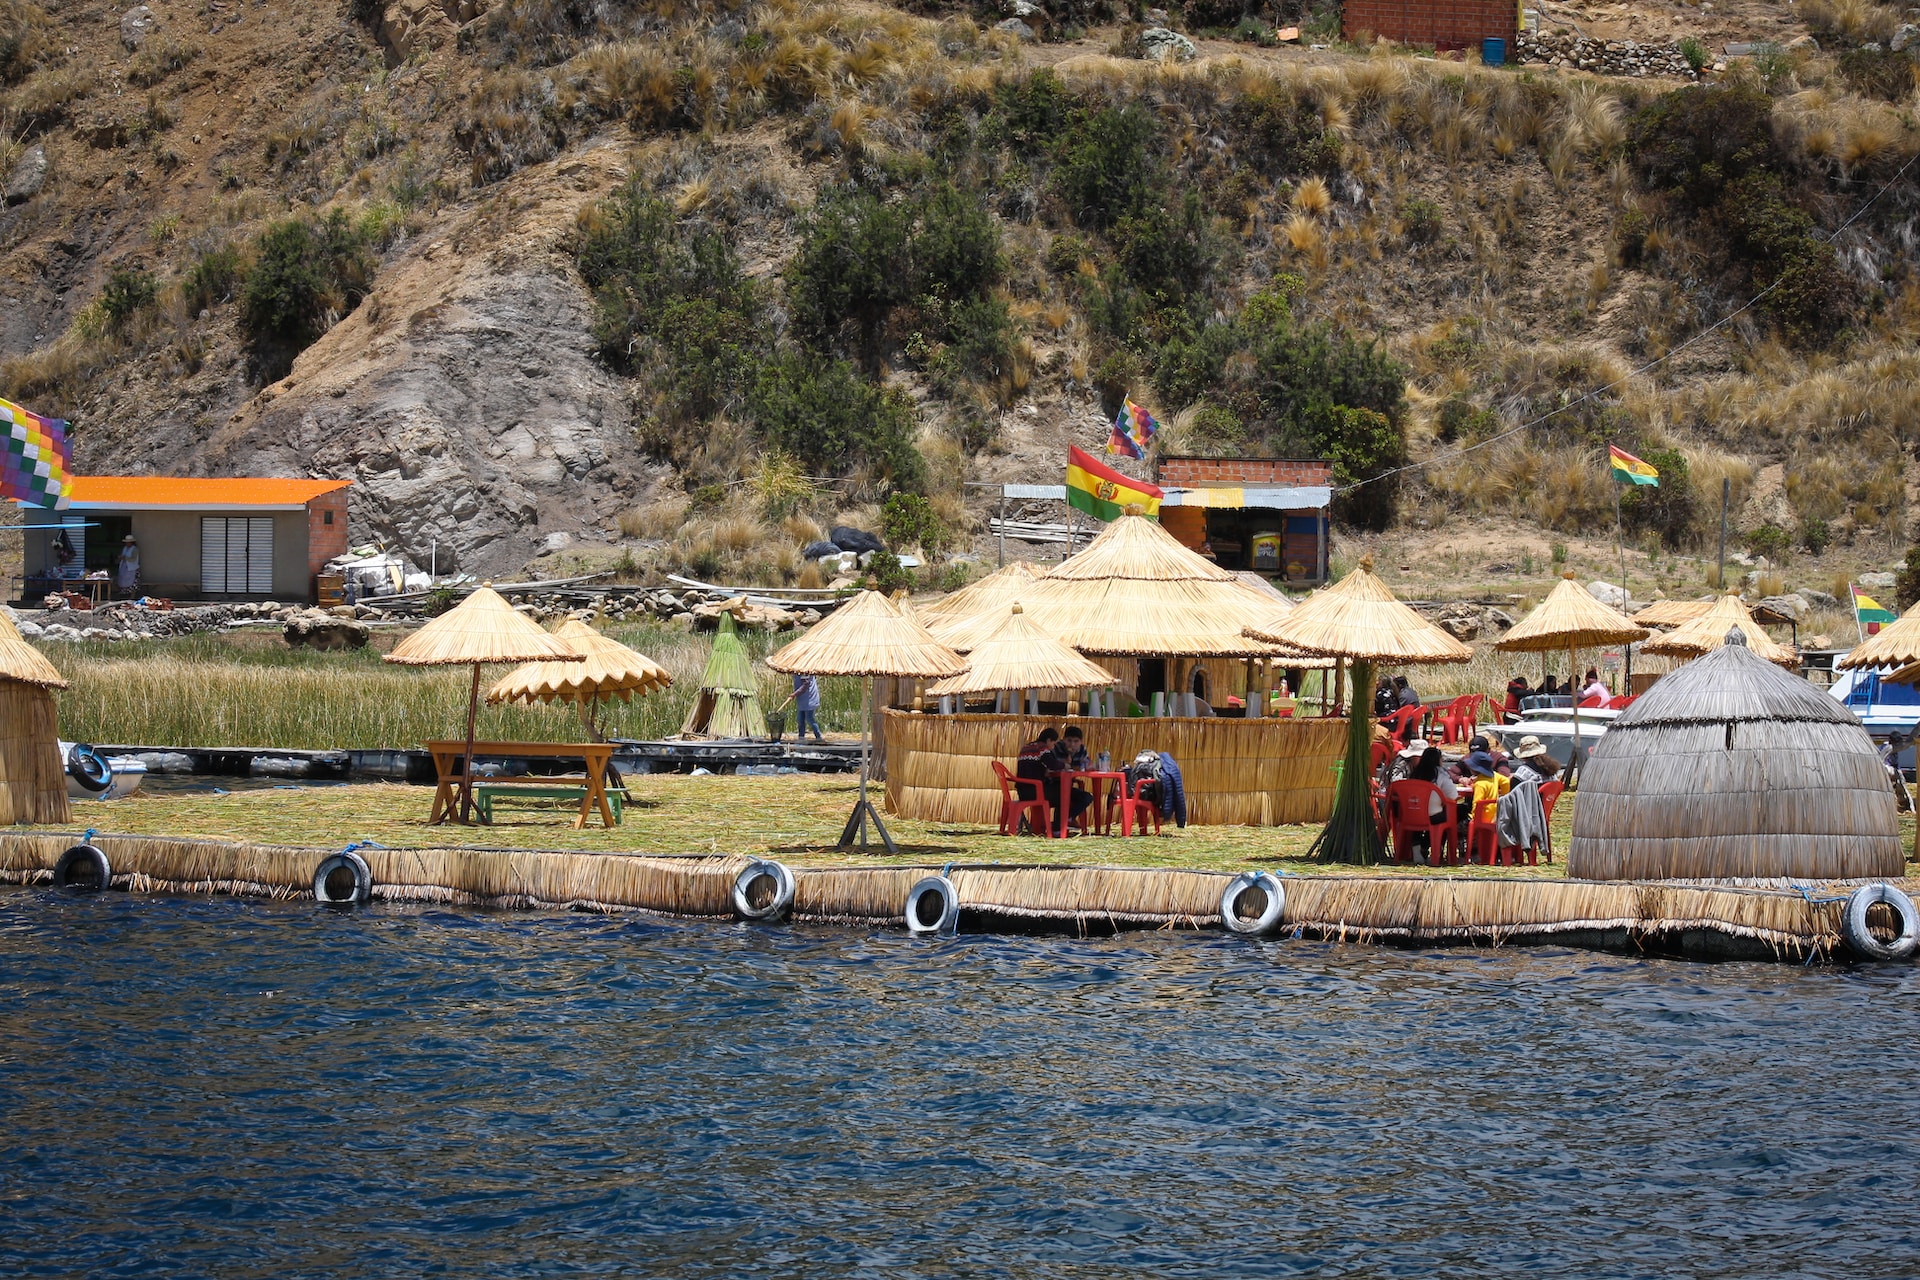 Lago Titicaca Photo by <a href="https://unsplash.com/fr/@sergich?utm_source=unsplash&utm_medium=referral&utm_content=creditCopyText">Sergio Arze</a> on <a href="https://unsplash.com/photos/gSqluByeaV0?utm_source=unsplash&utm_medium=referral&utm_content=creditCopyText">Unsplash</a>